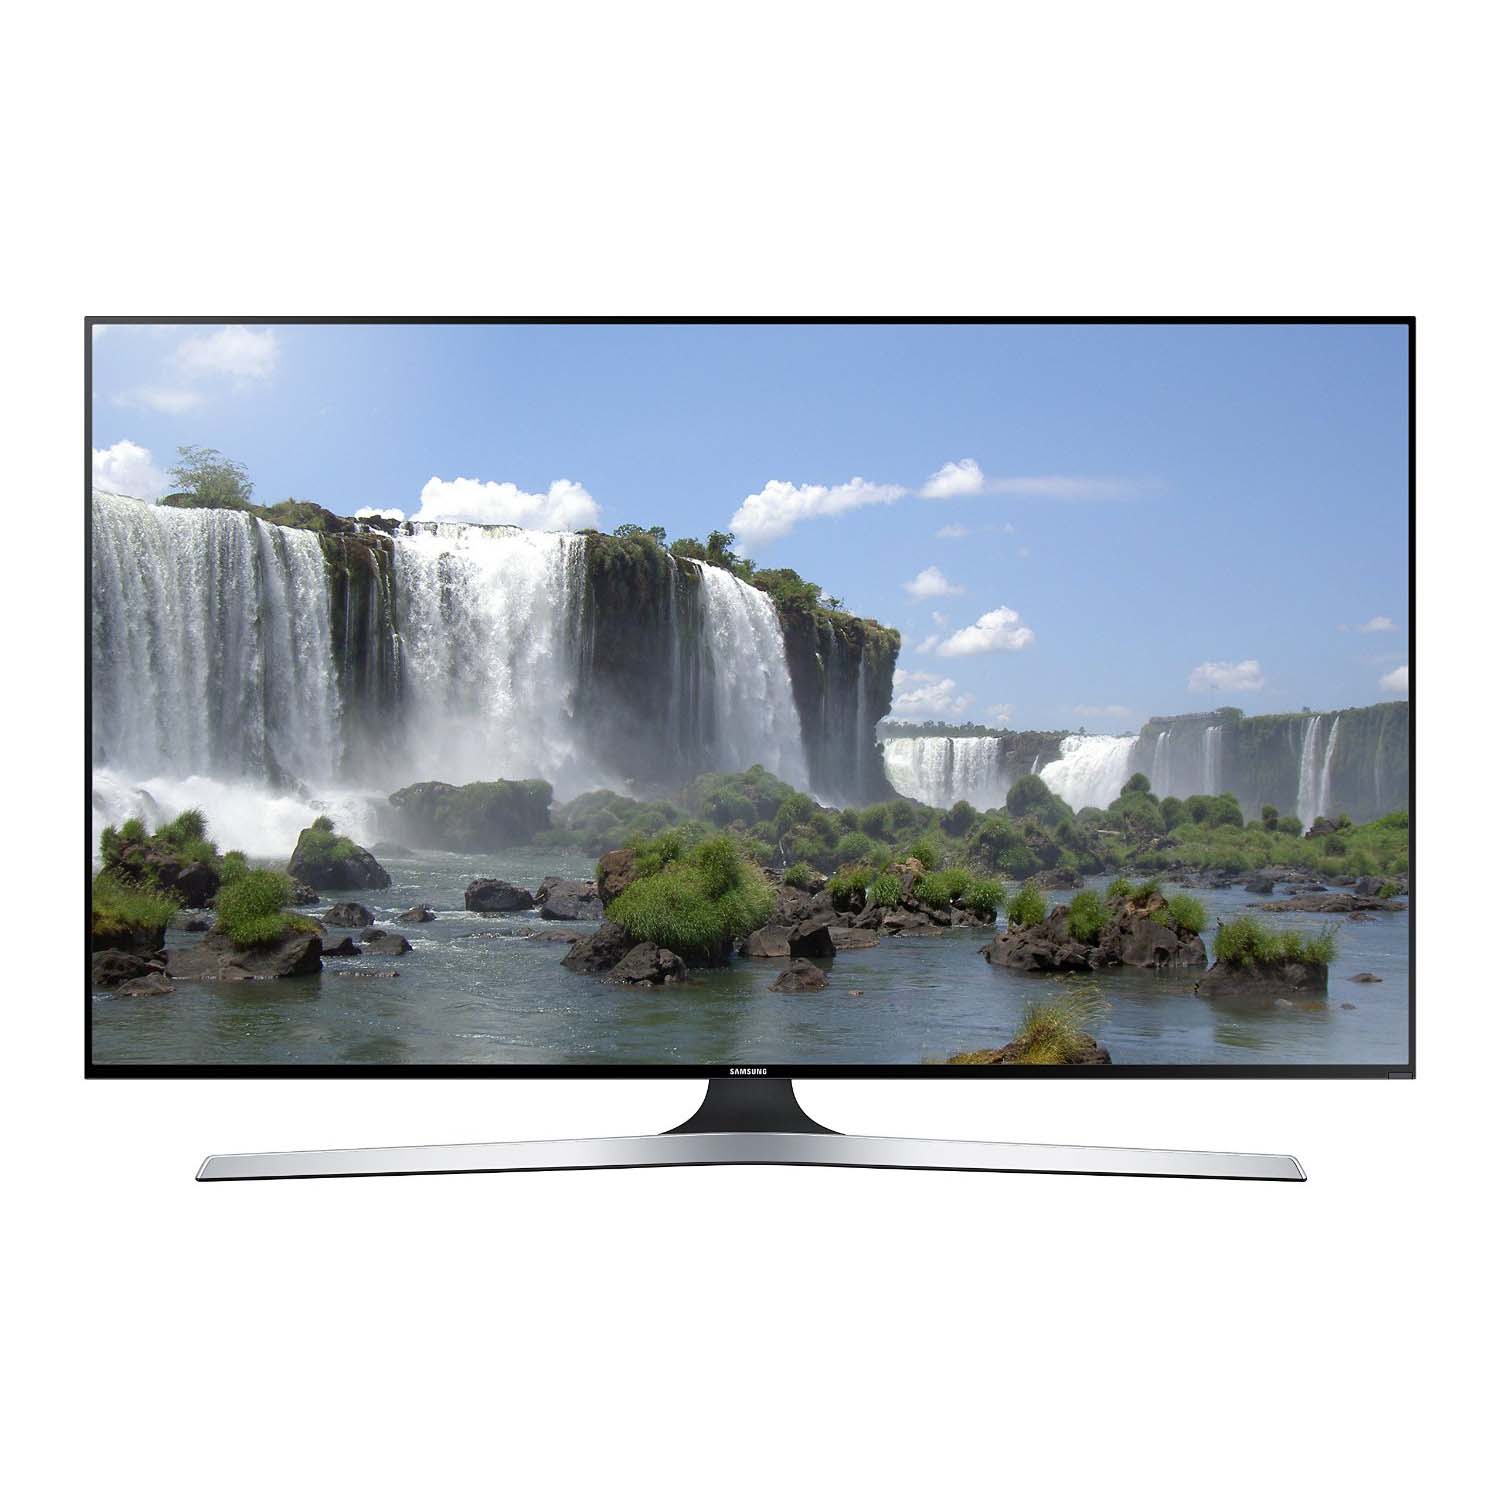 Samsung UN65J6300 65-Inch 1080p Smart LED TV (2015 Model) *관부가세 별도*